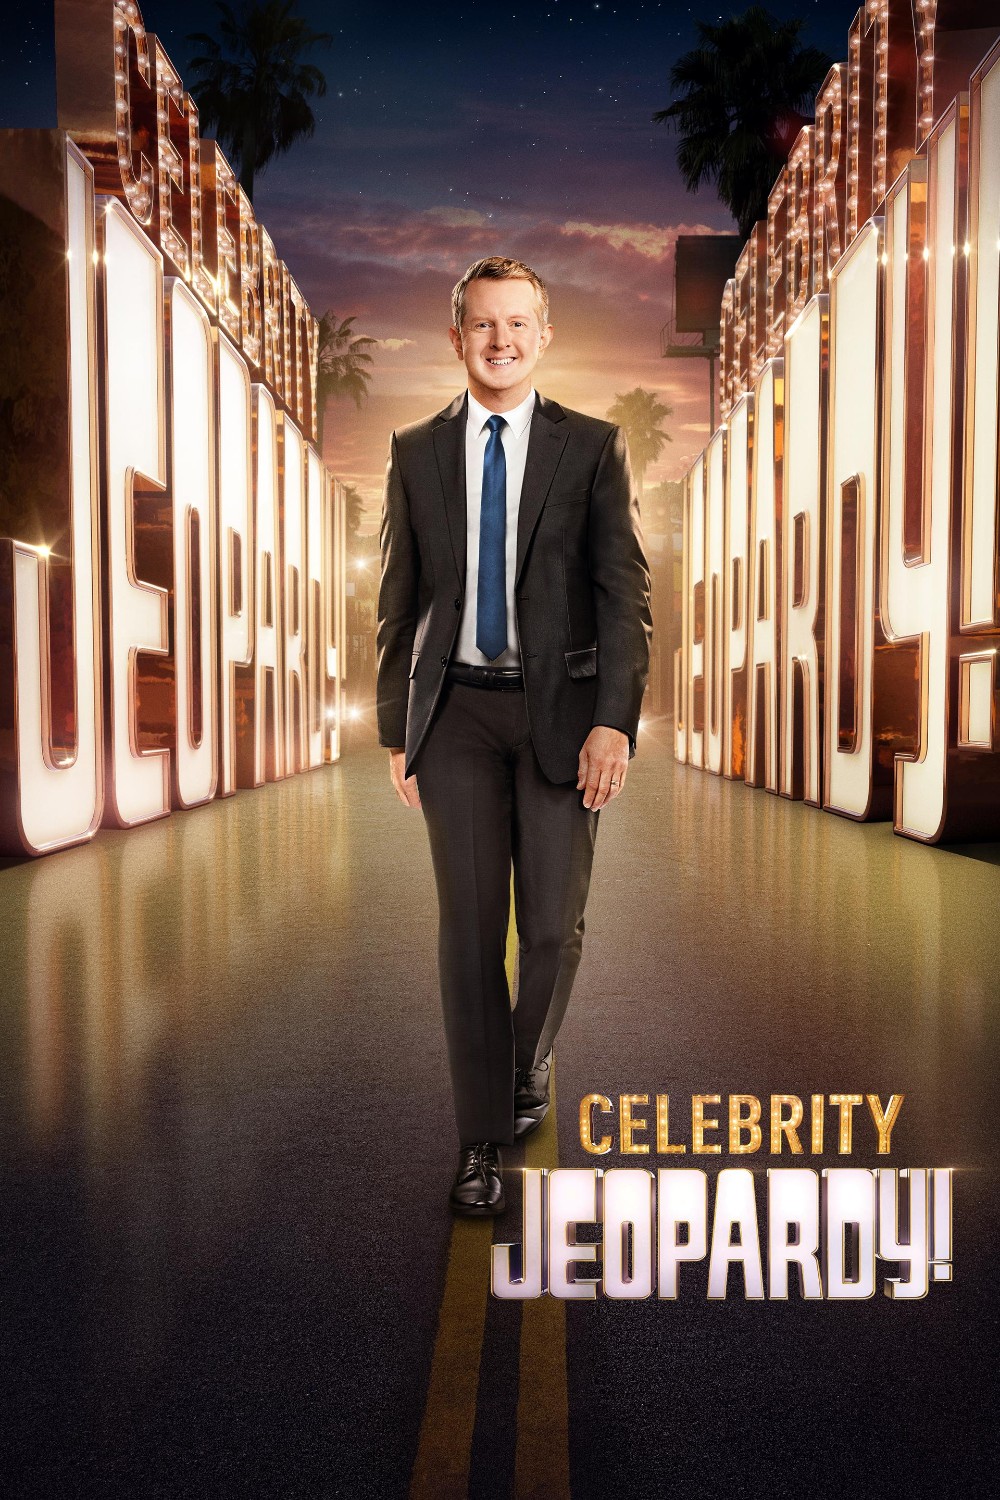 Celebrity Jeopardy S02E13 [720p] (x265) 8bc88747a1133cd15cd79e45a6253791